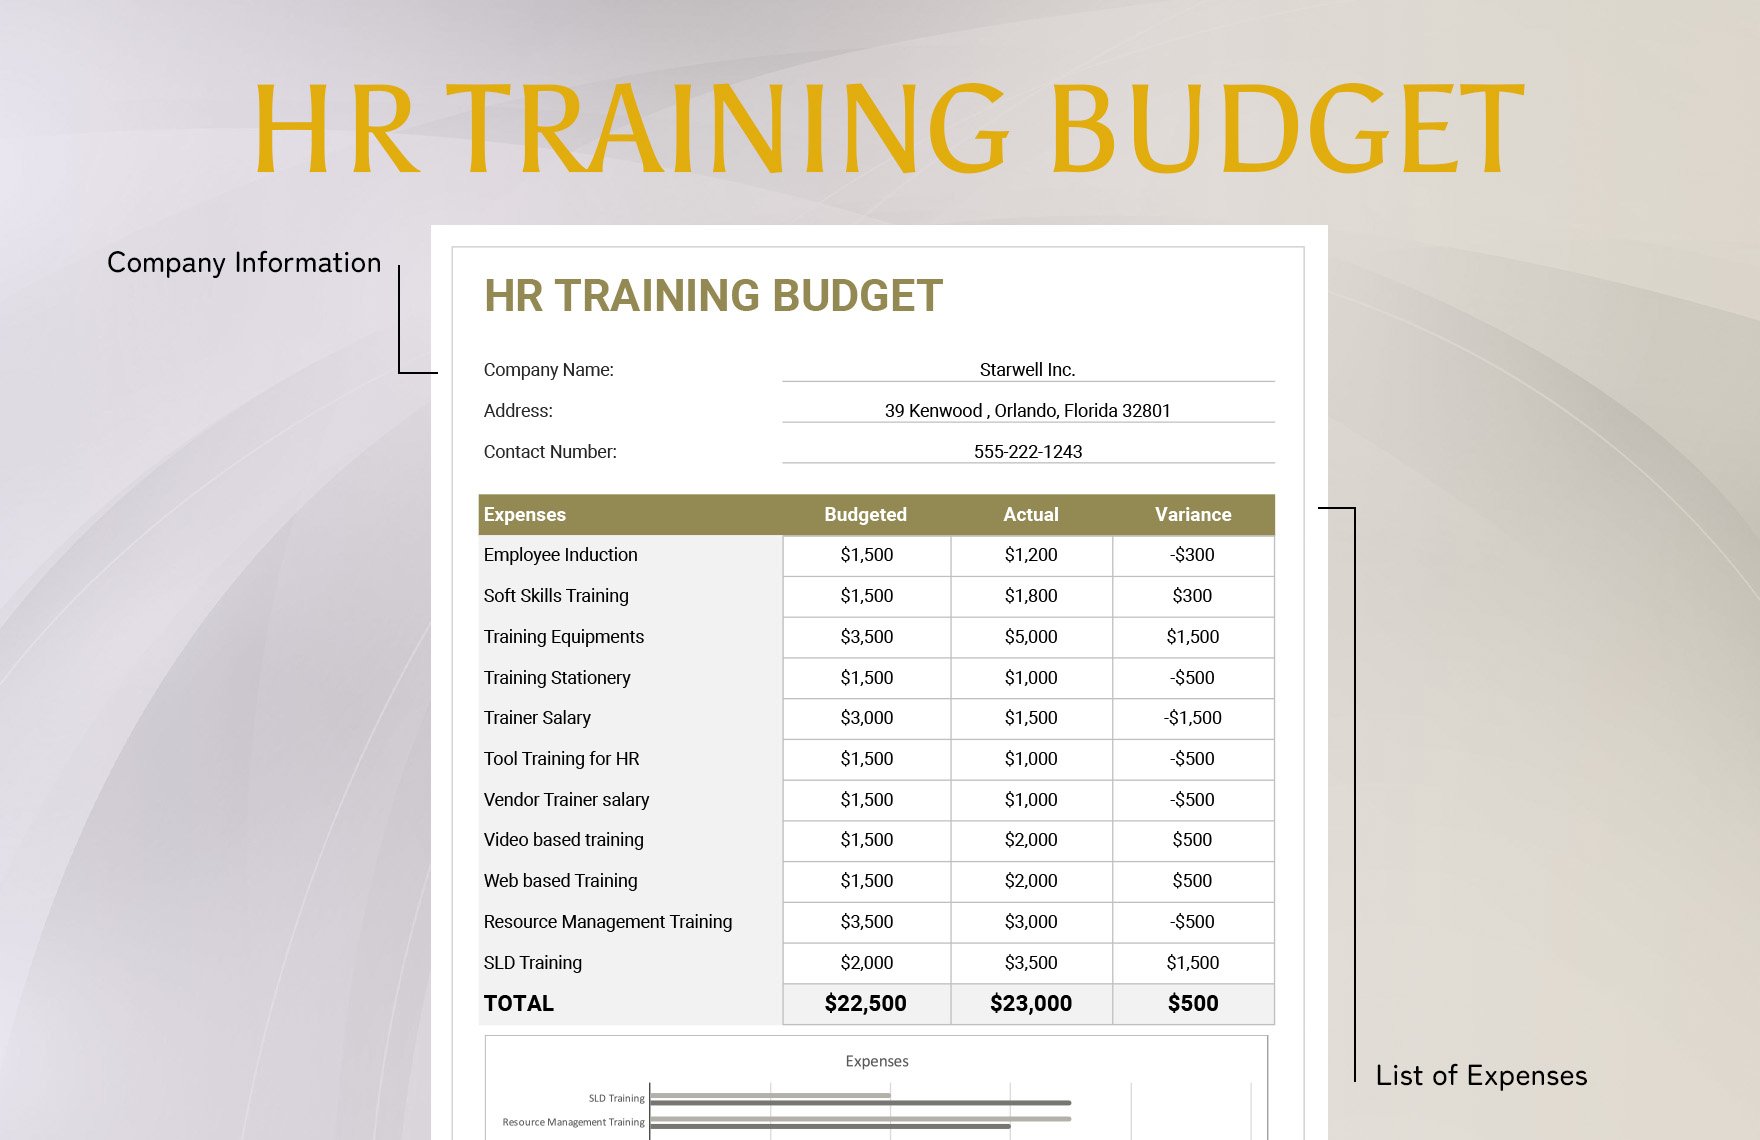 HR Training Budget Template